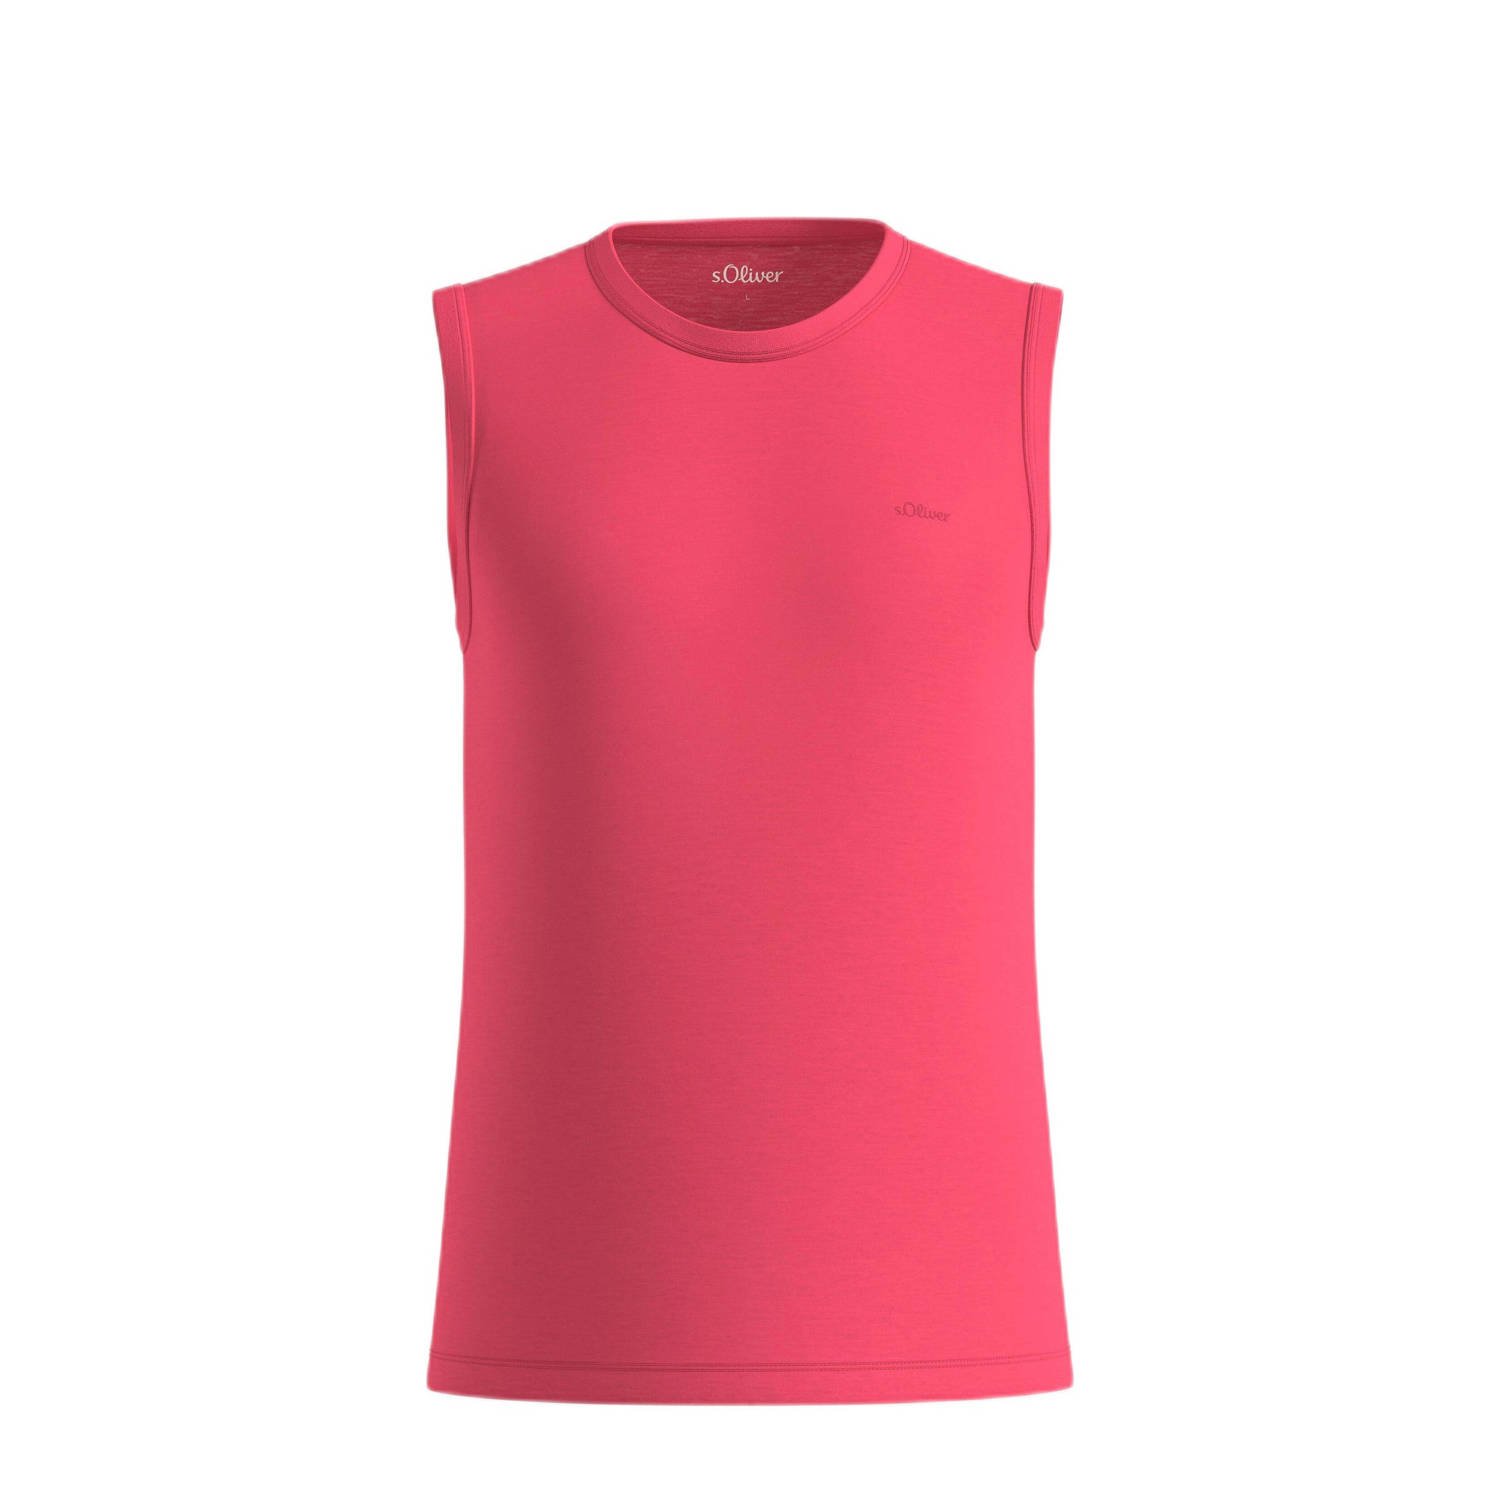 S.Oliver T-shirt roze